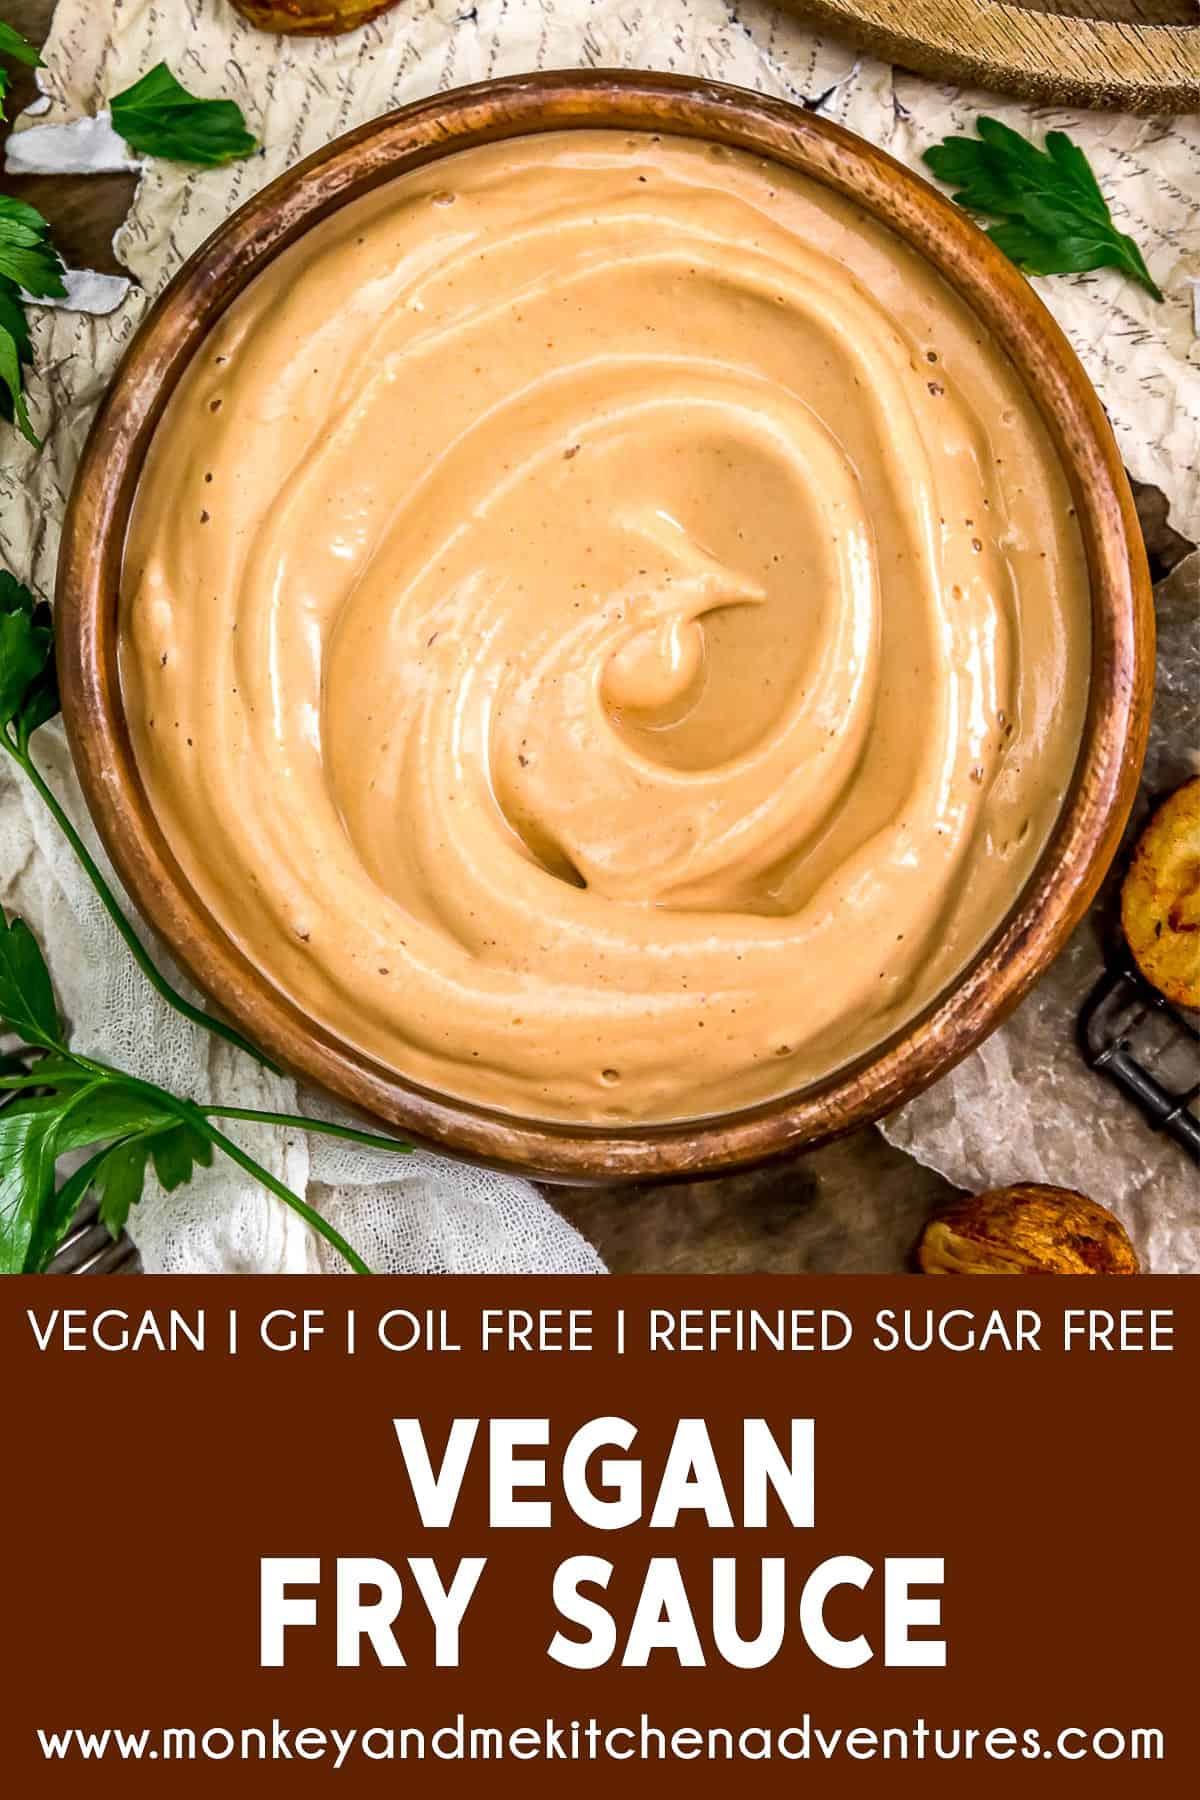 Vegan Fry Sauce with Text Description